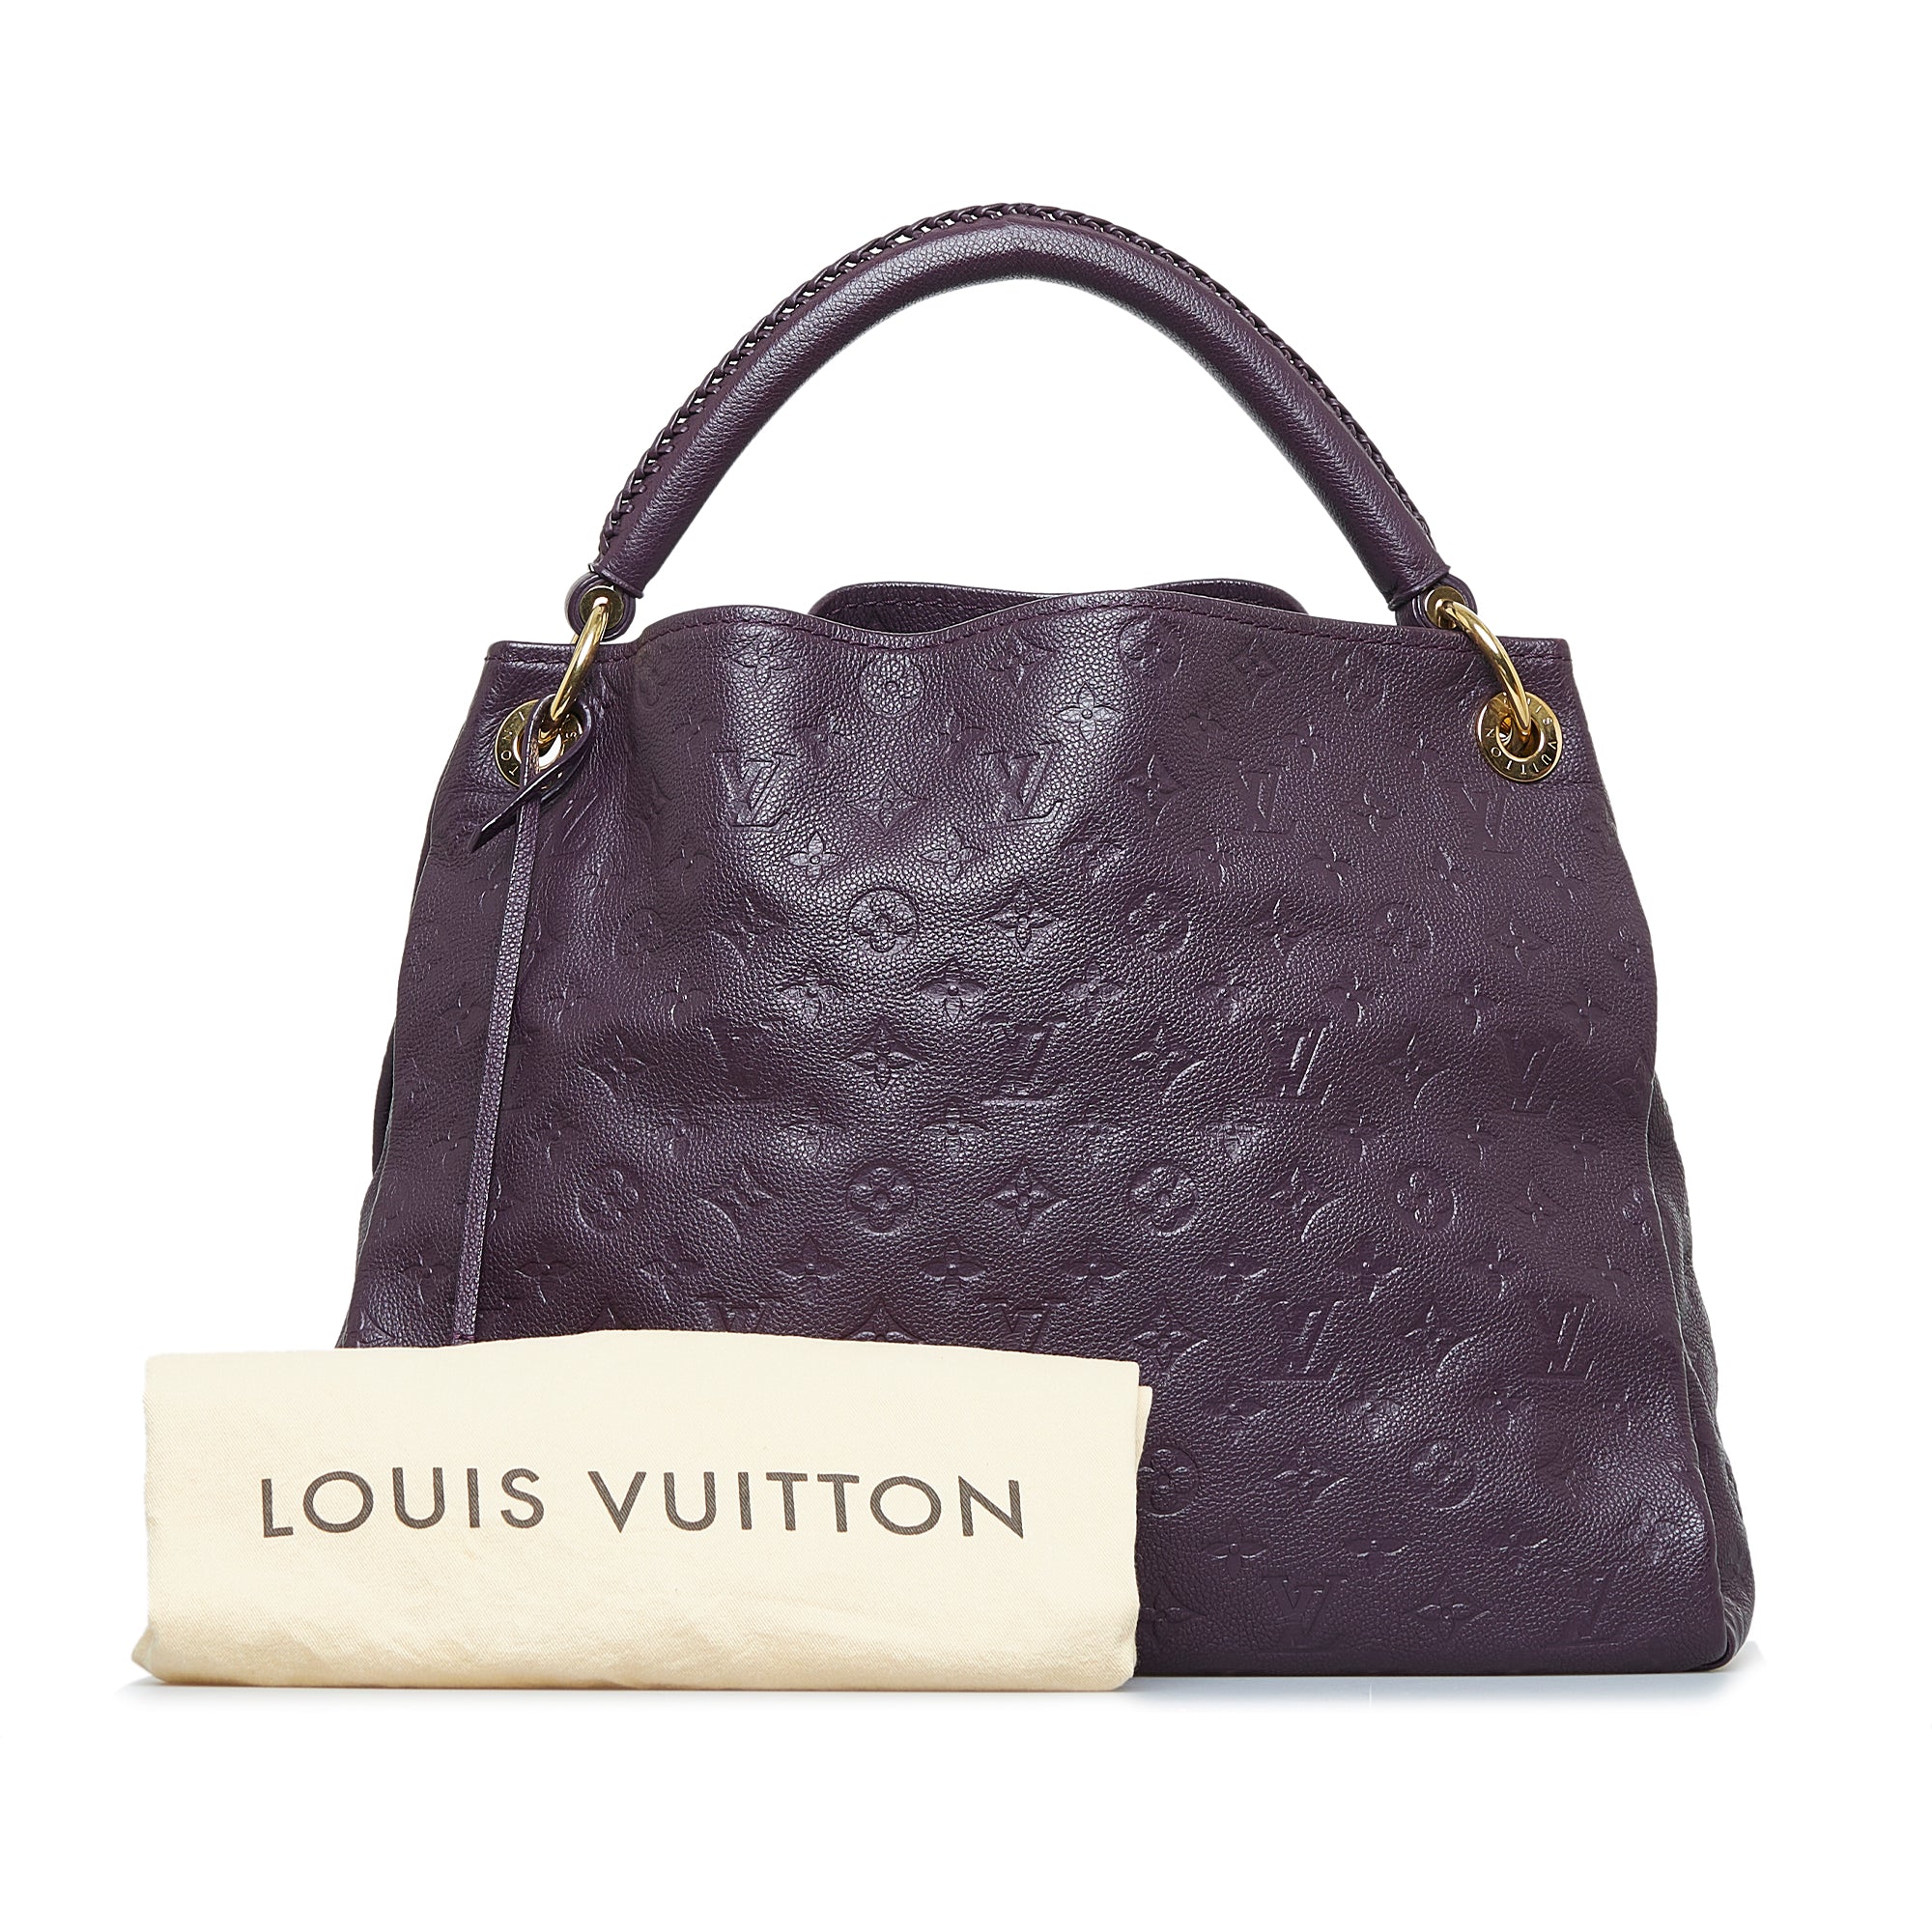 Louis Vuitton Artsy MM Review LV Artsy - second hand louis vuitton